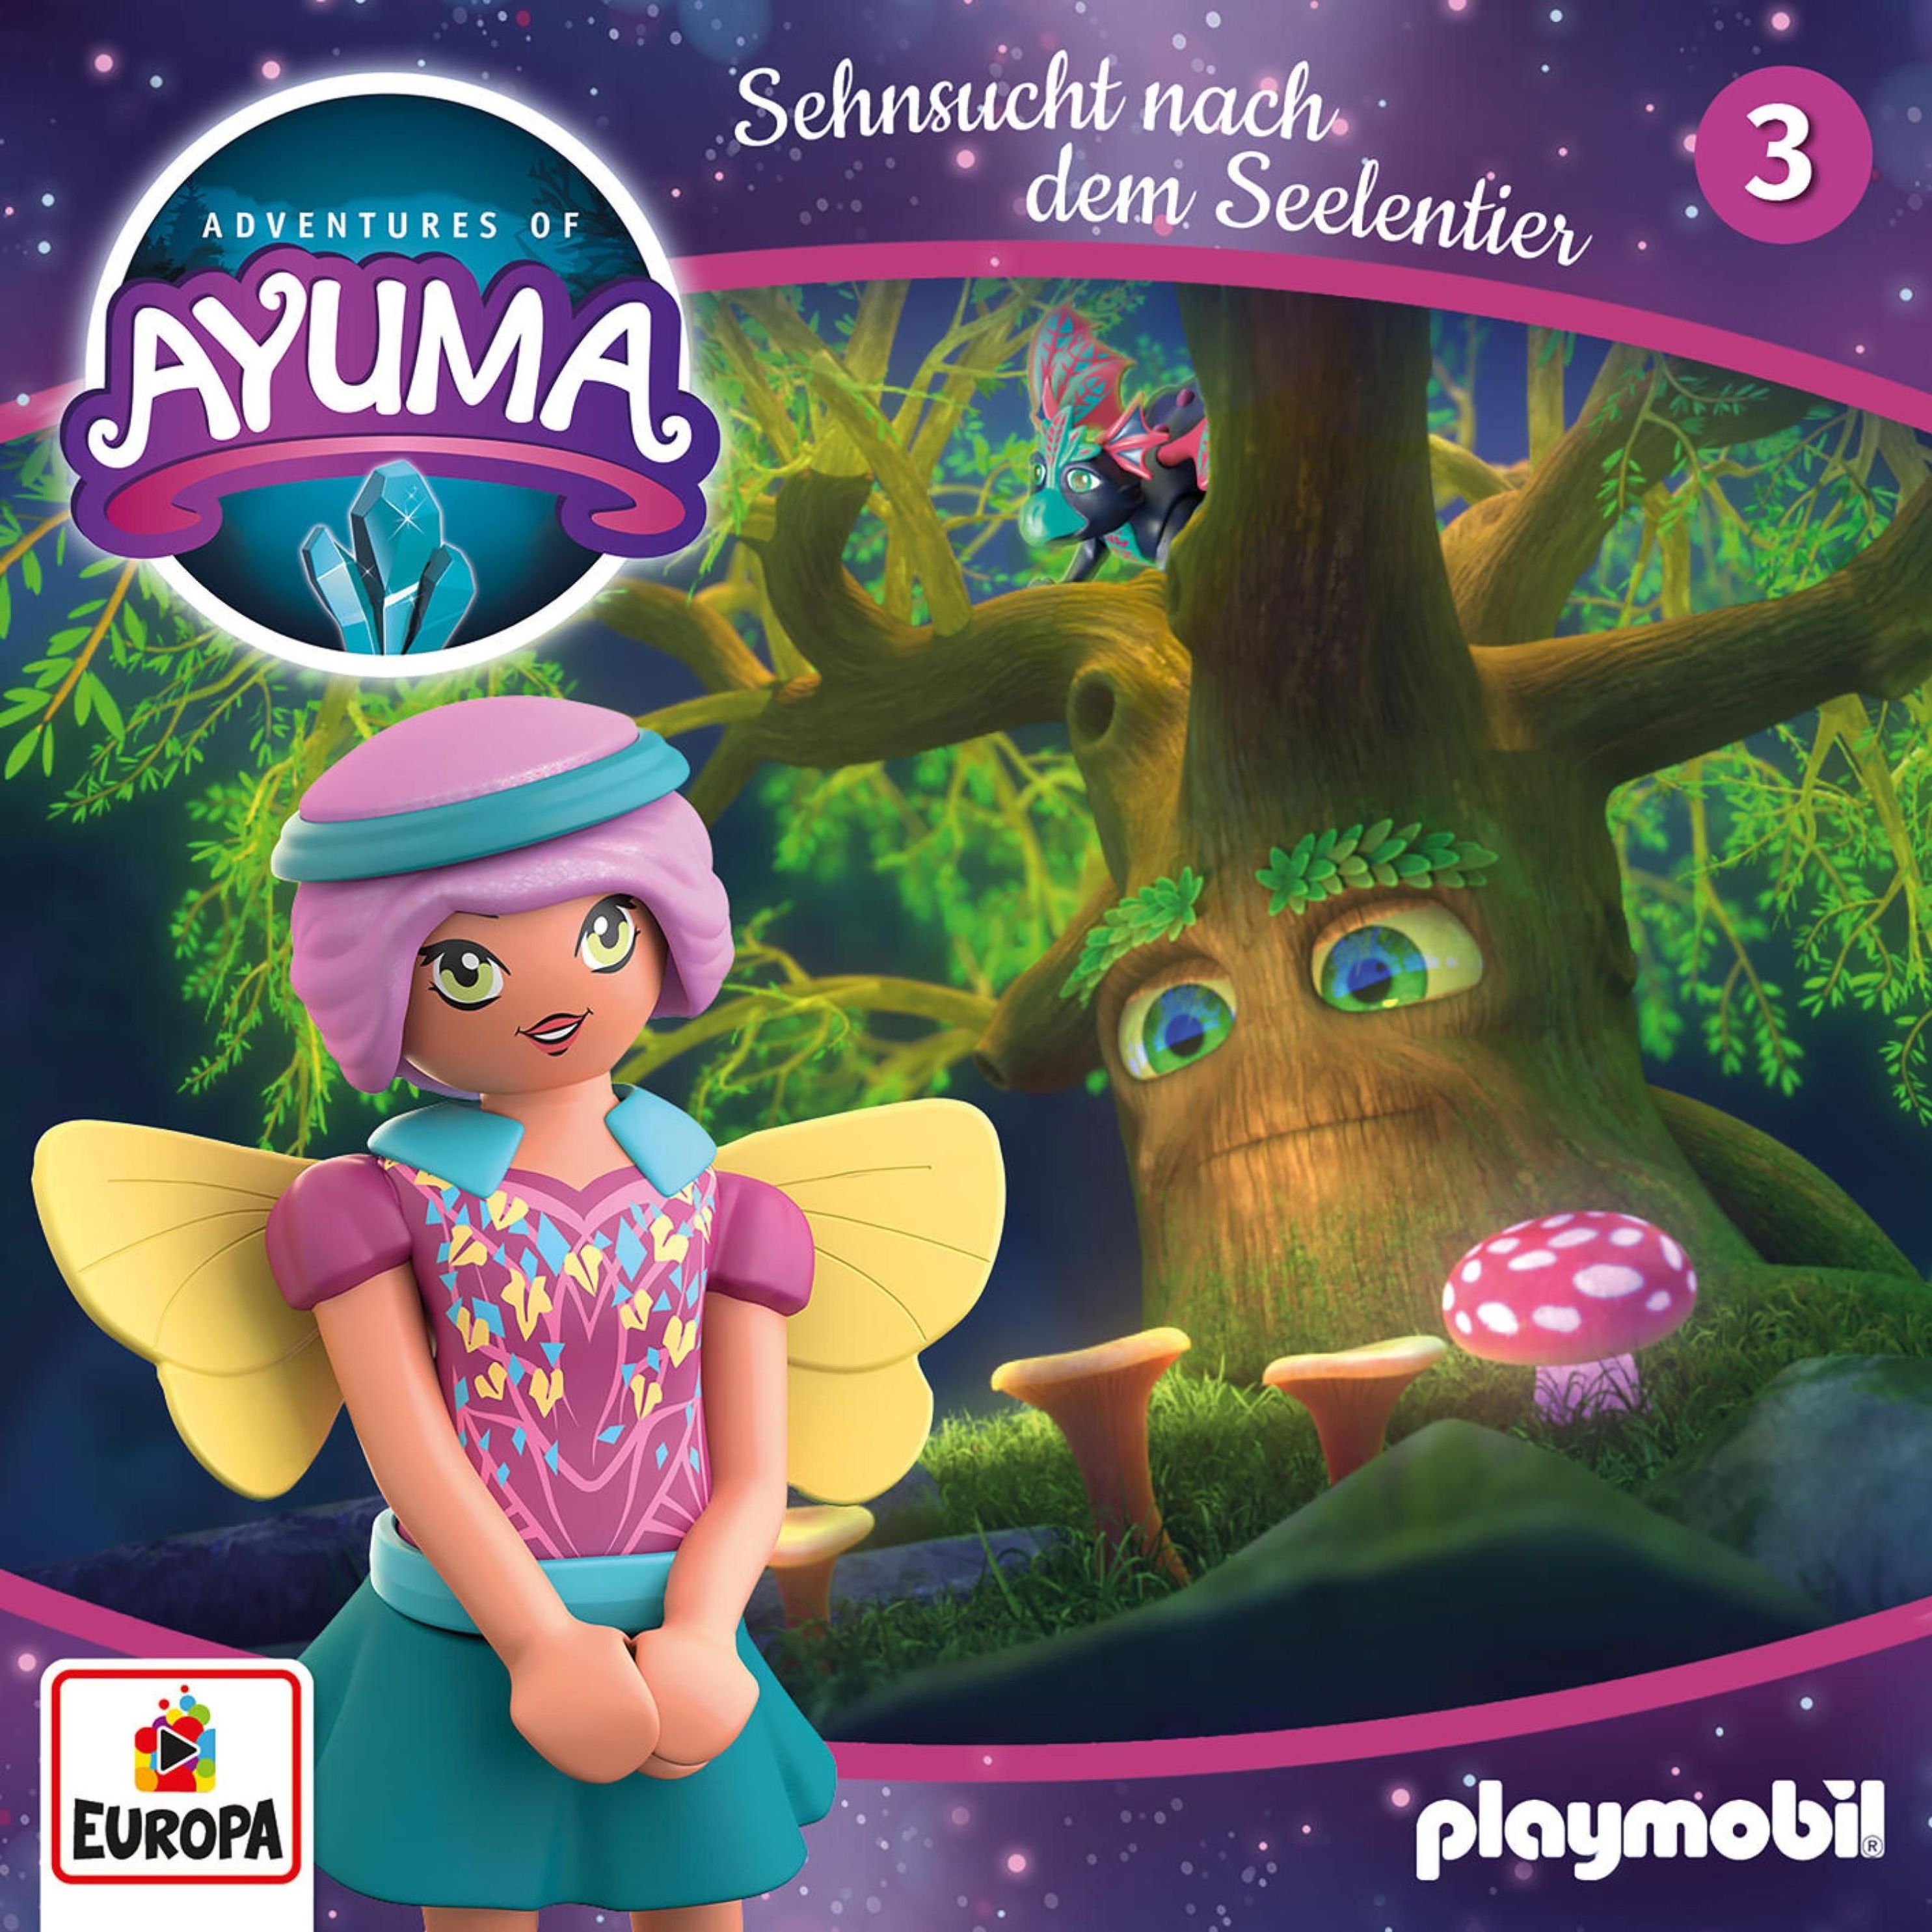 PLAYMOBIL Hörspiele - 3 - Adventures of Ayuma - Folge 3: Sehnsucht nach dem  Seelentier Hörbuch Download